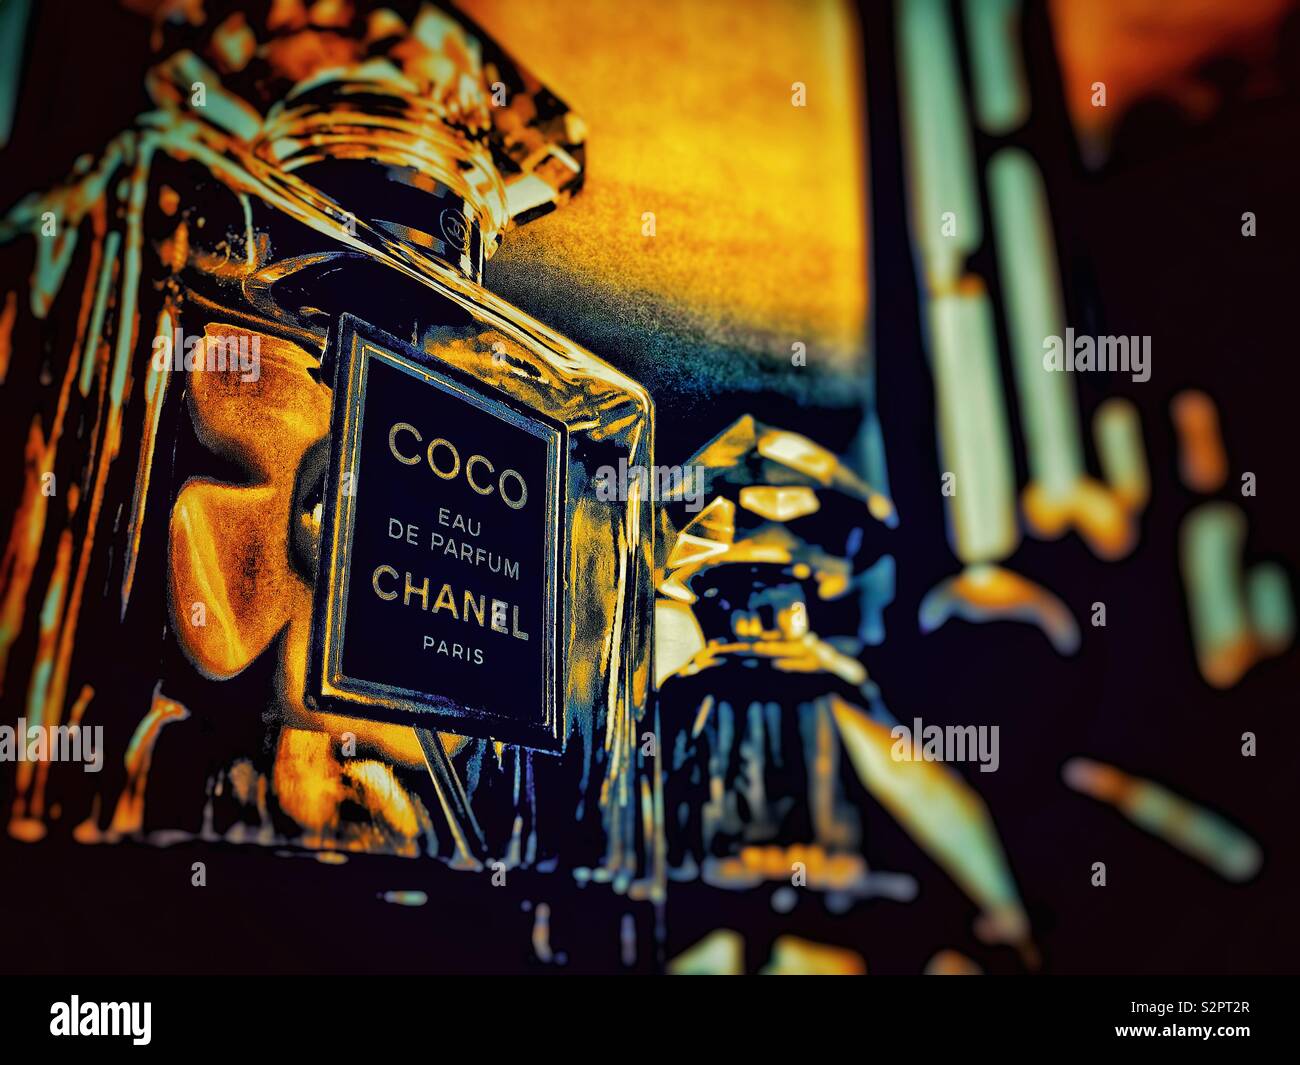 Chanel Parfüm Flasche am Schminktisch Stockfotografie - Alamy